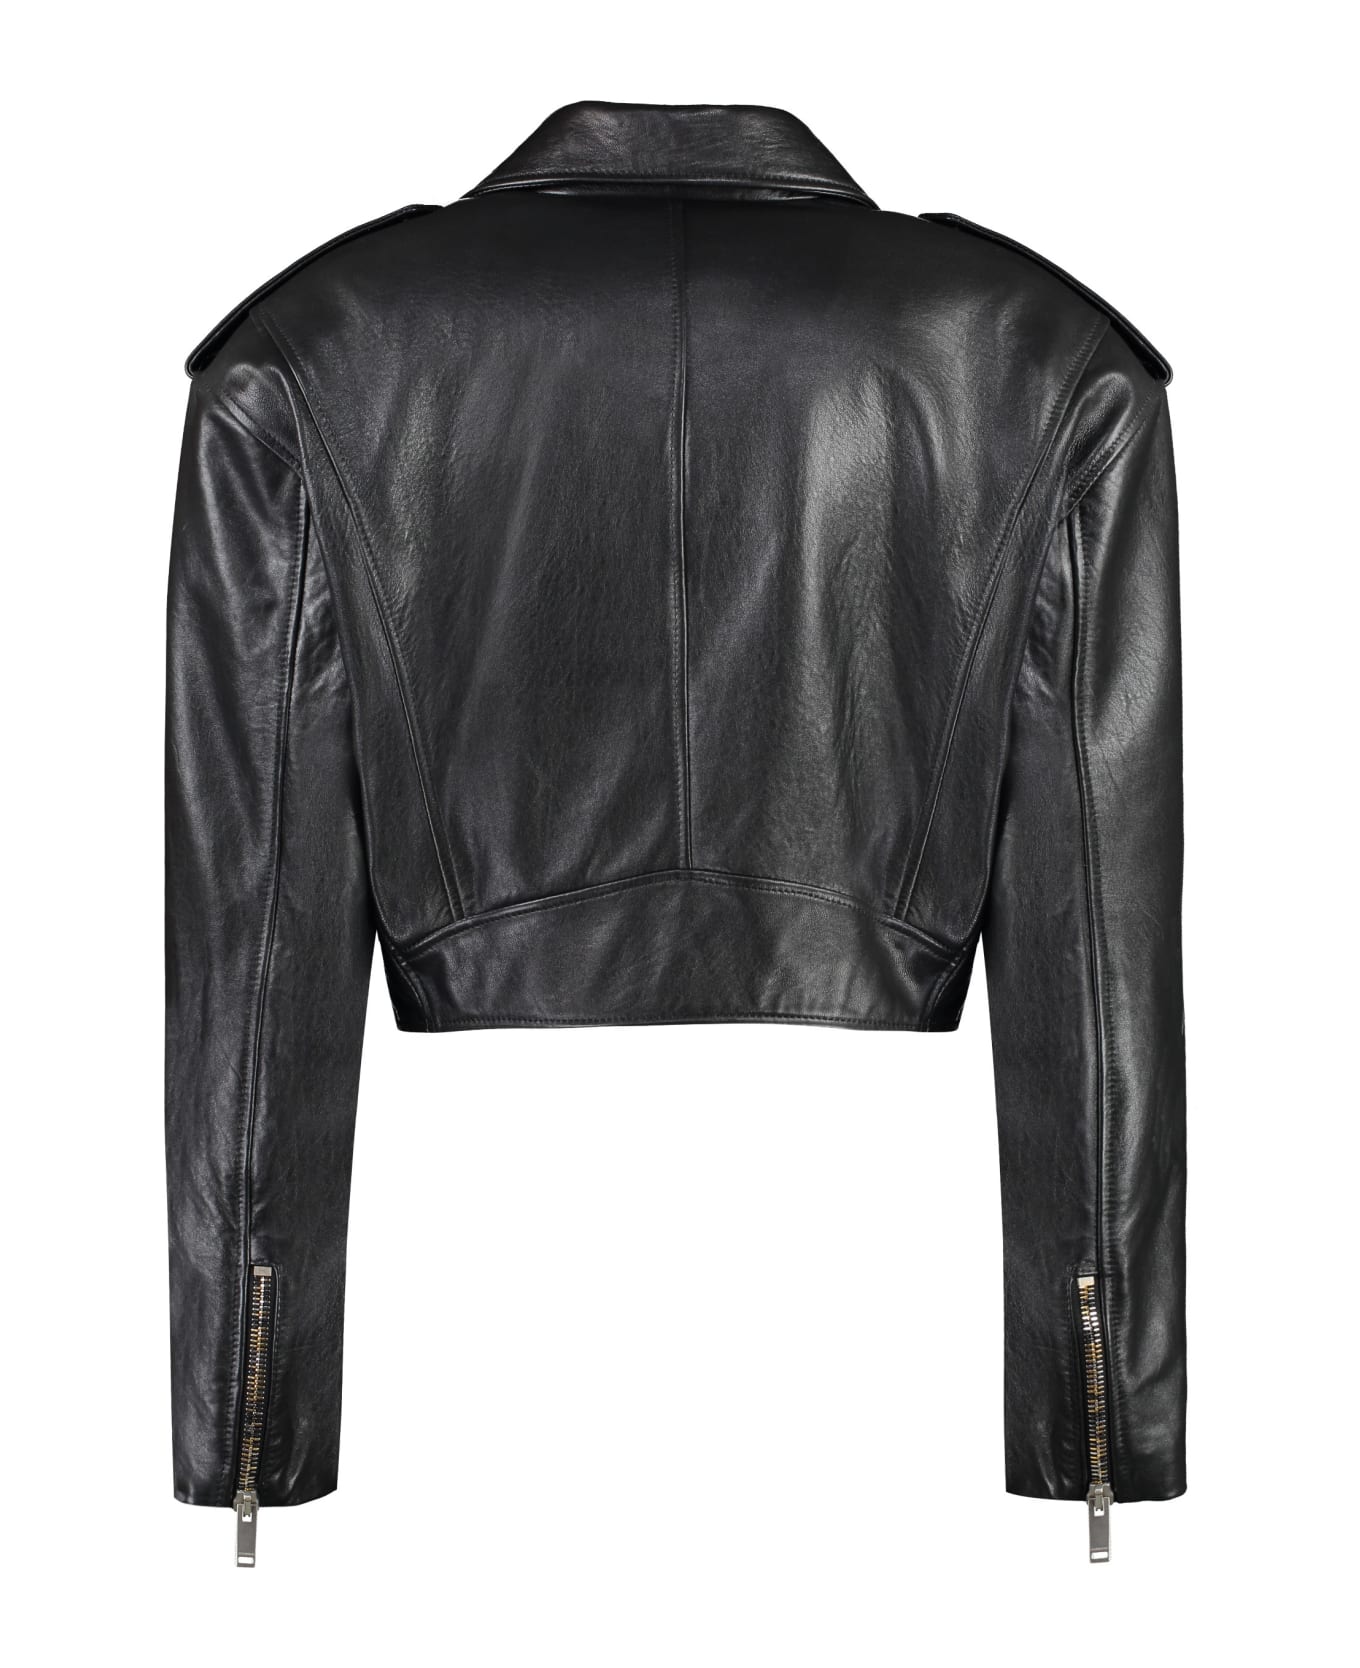 HALFBOY Leather Jacket - black